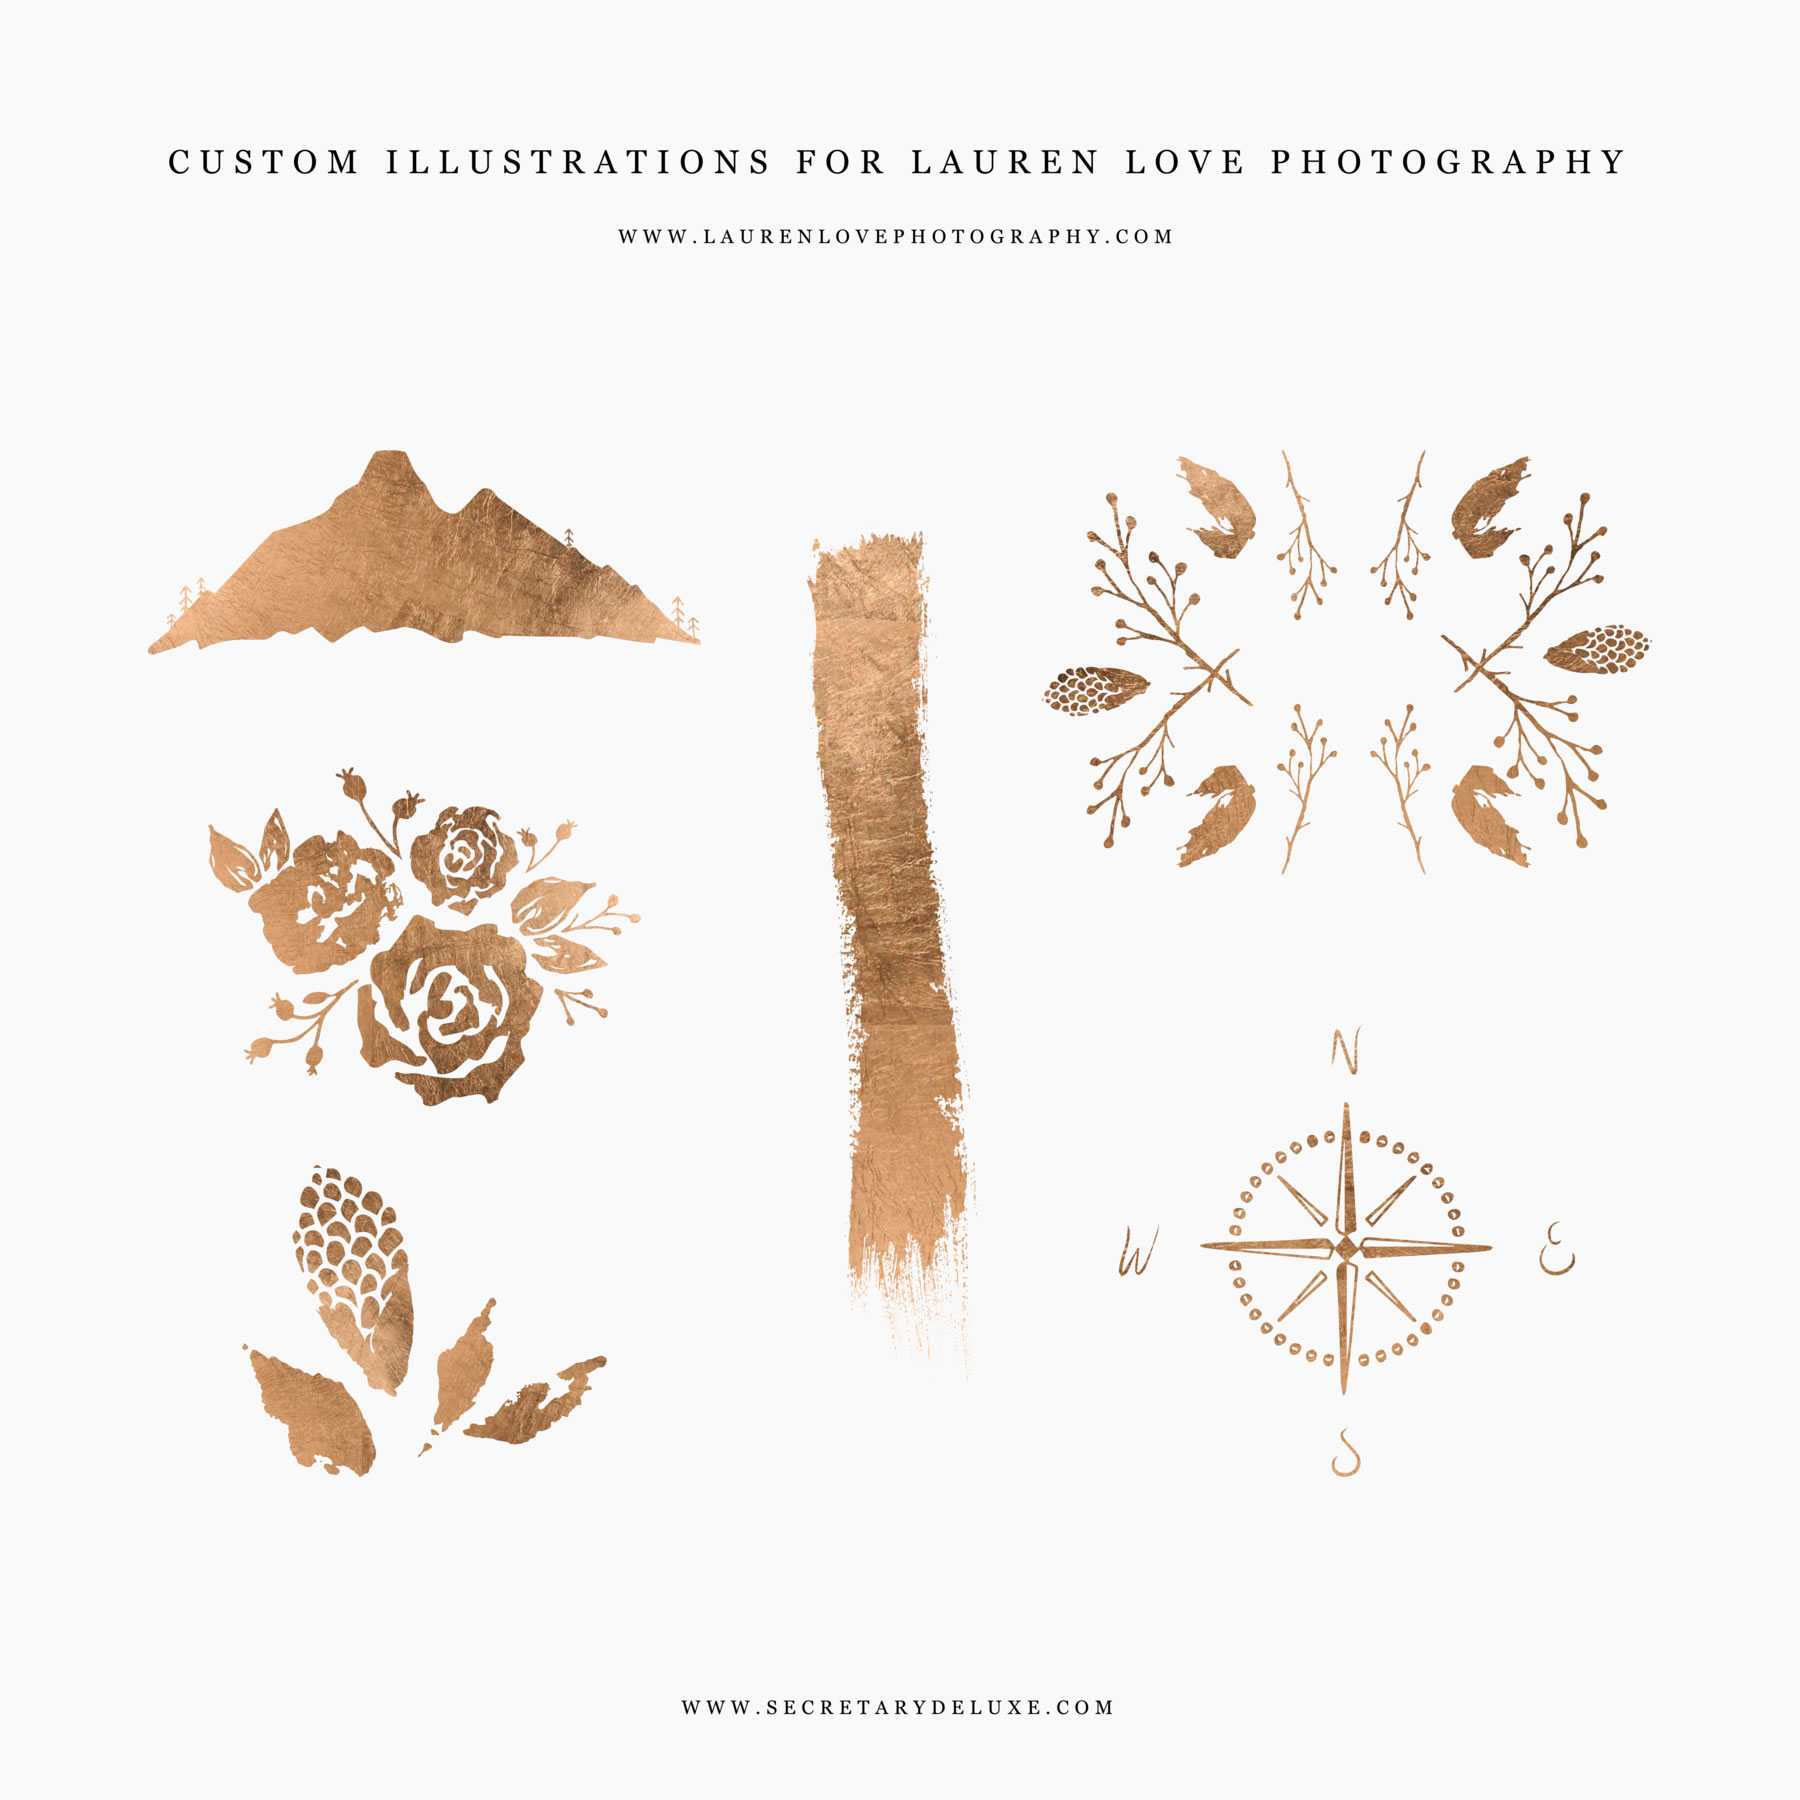 lauren-love-illustrations - Copy